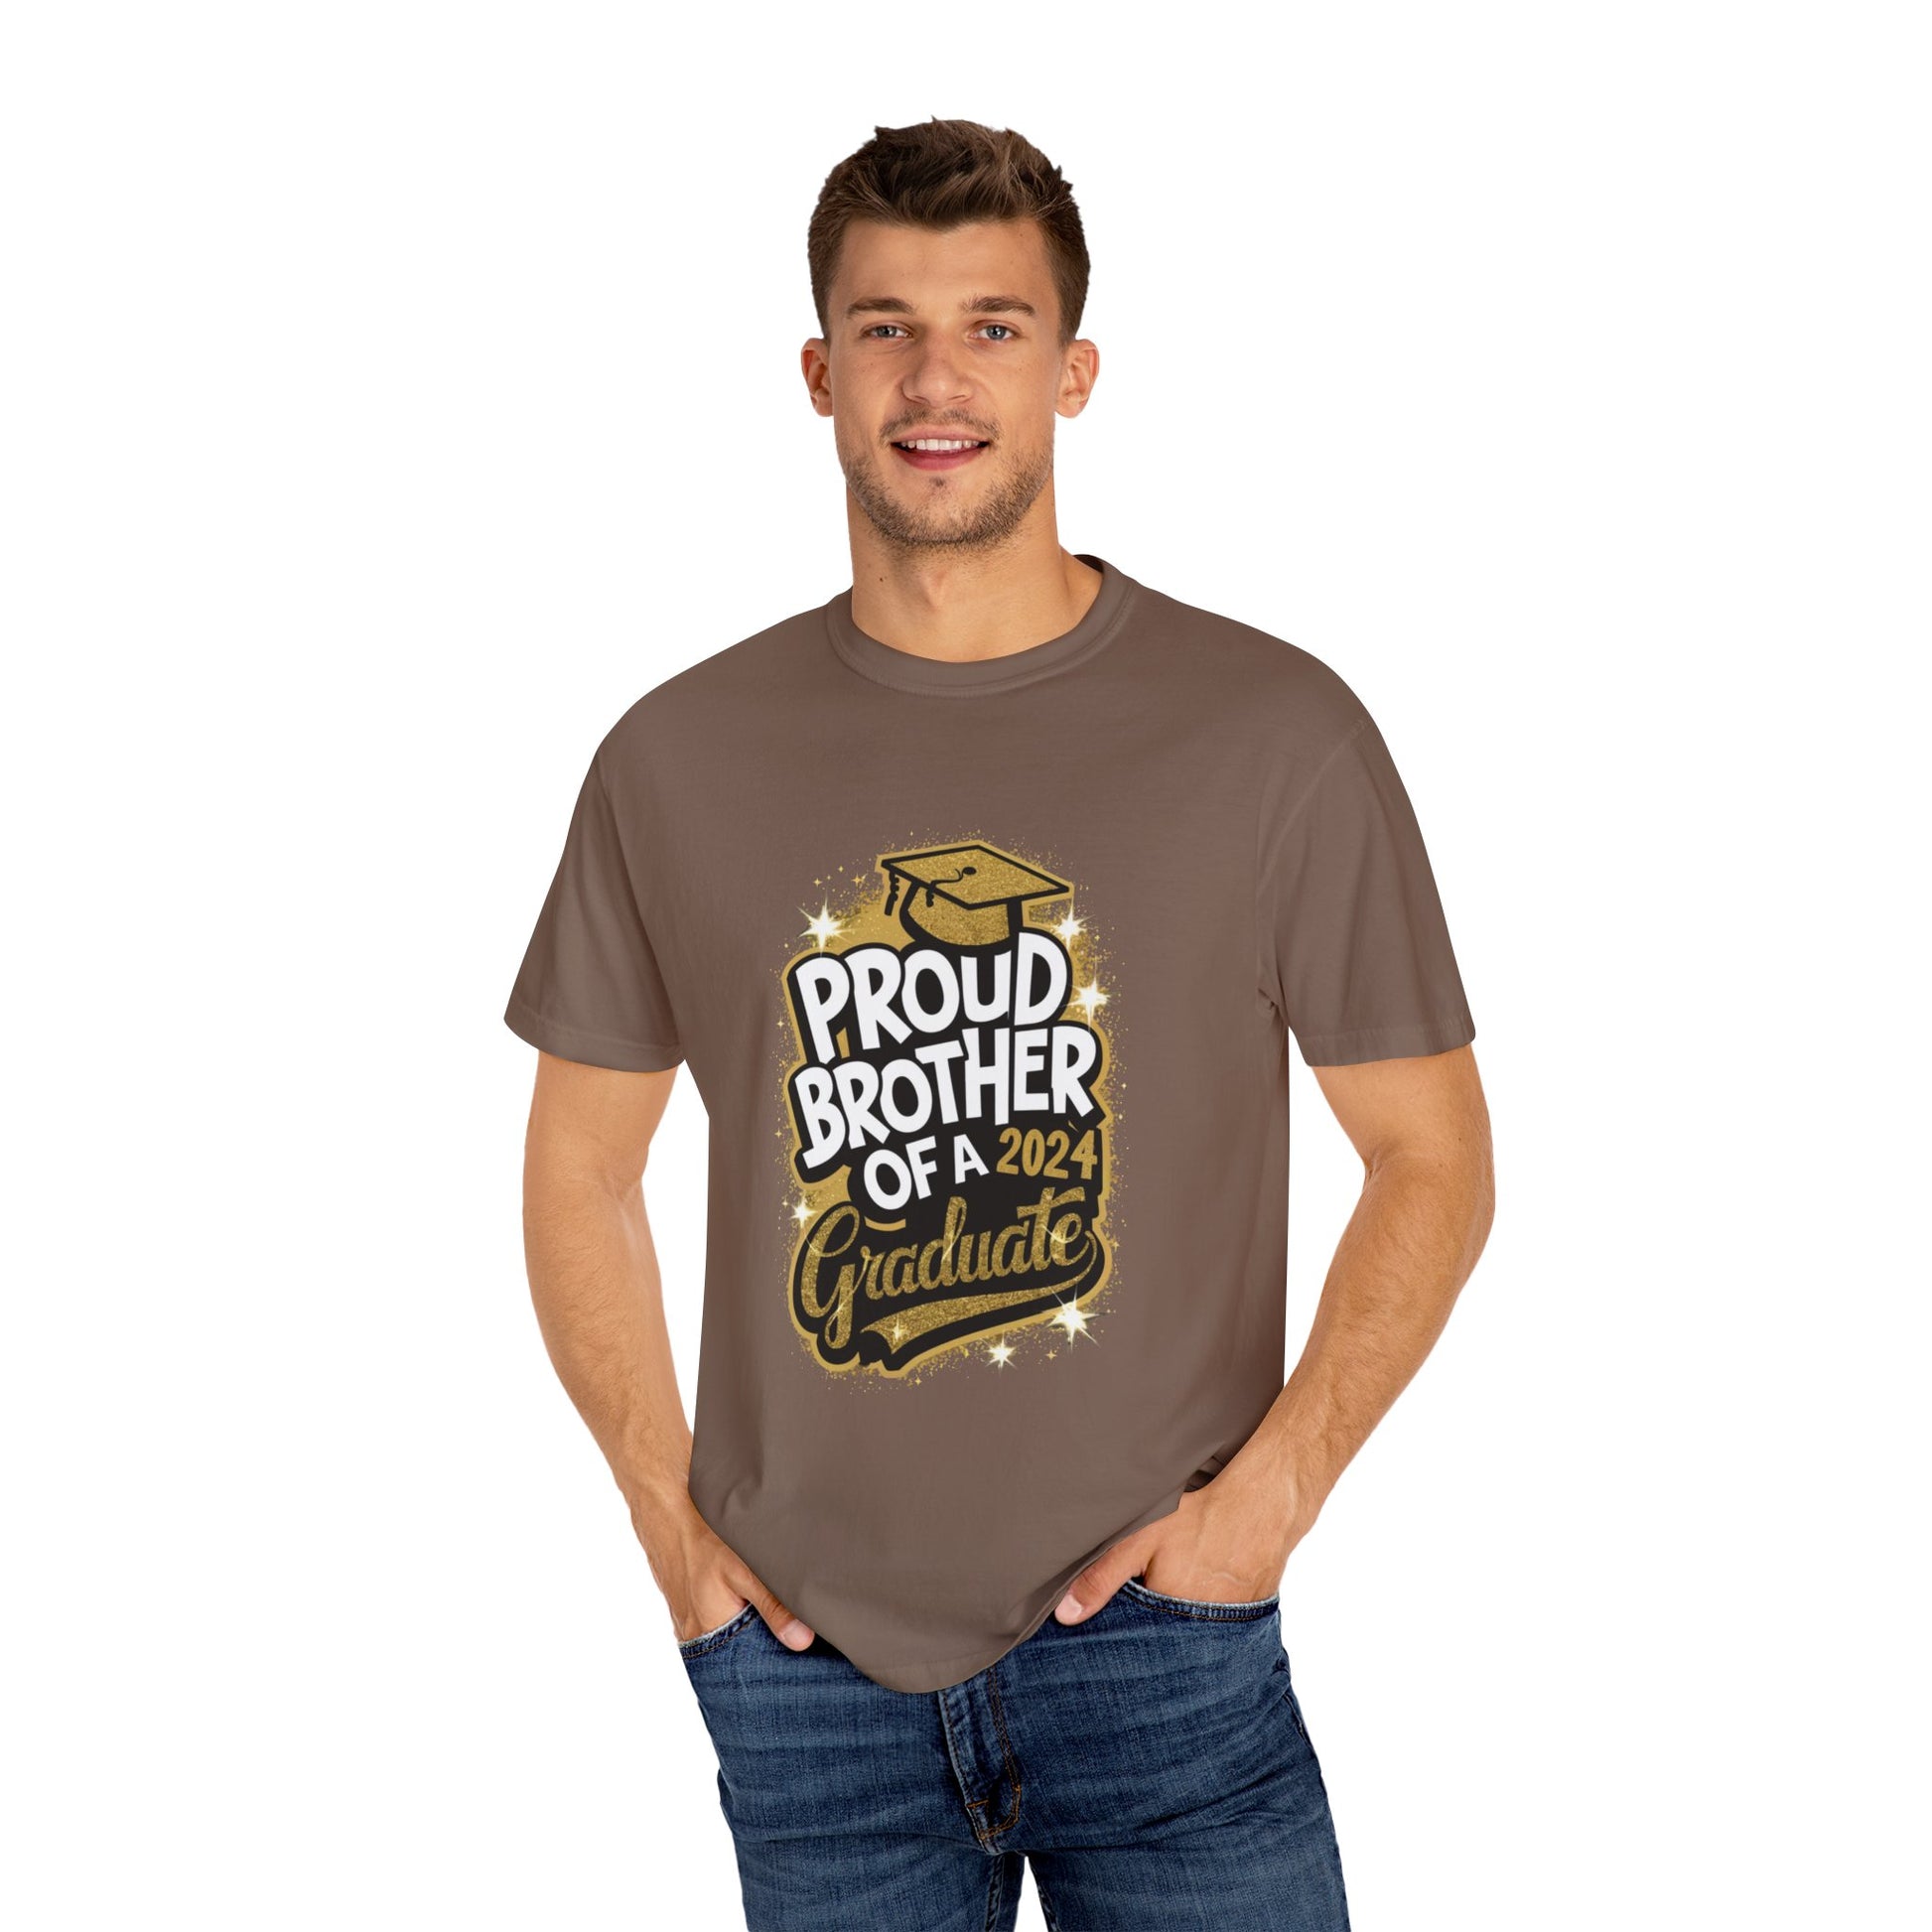 Proud Brother of a 2024 Graduate Unisex Garment-dyed T-shirt Cotton Funny Humorous Graphic Soft Premium Unisex Men Women Black T-shirt Birthday Gift-60